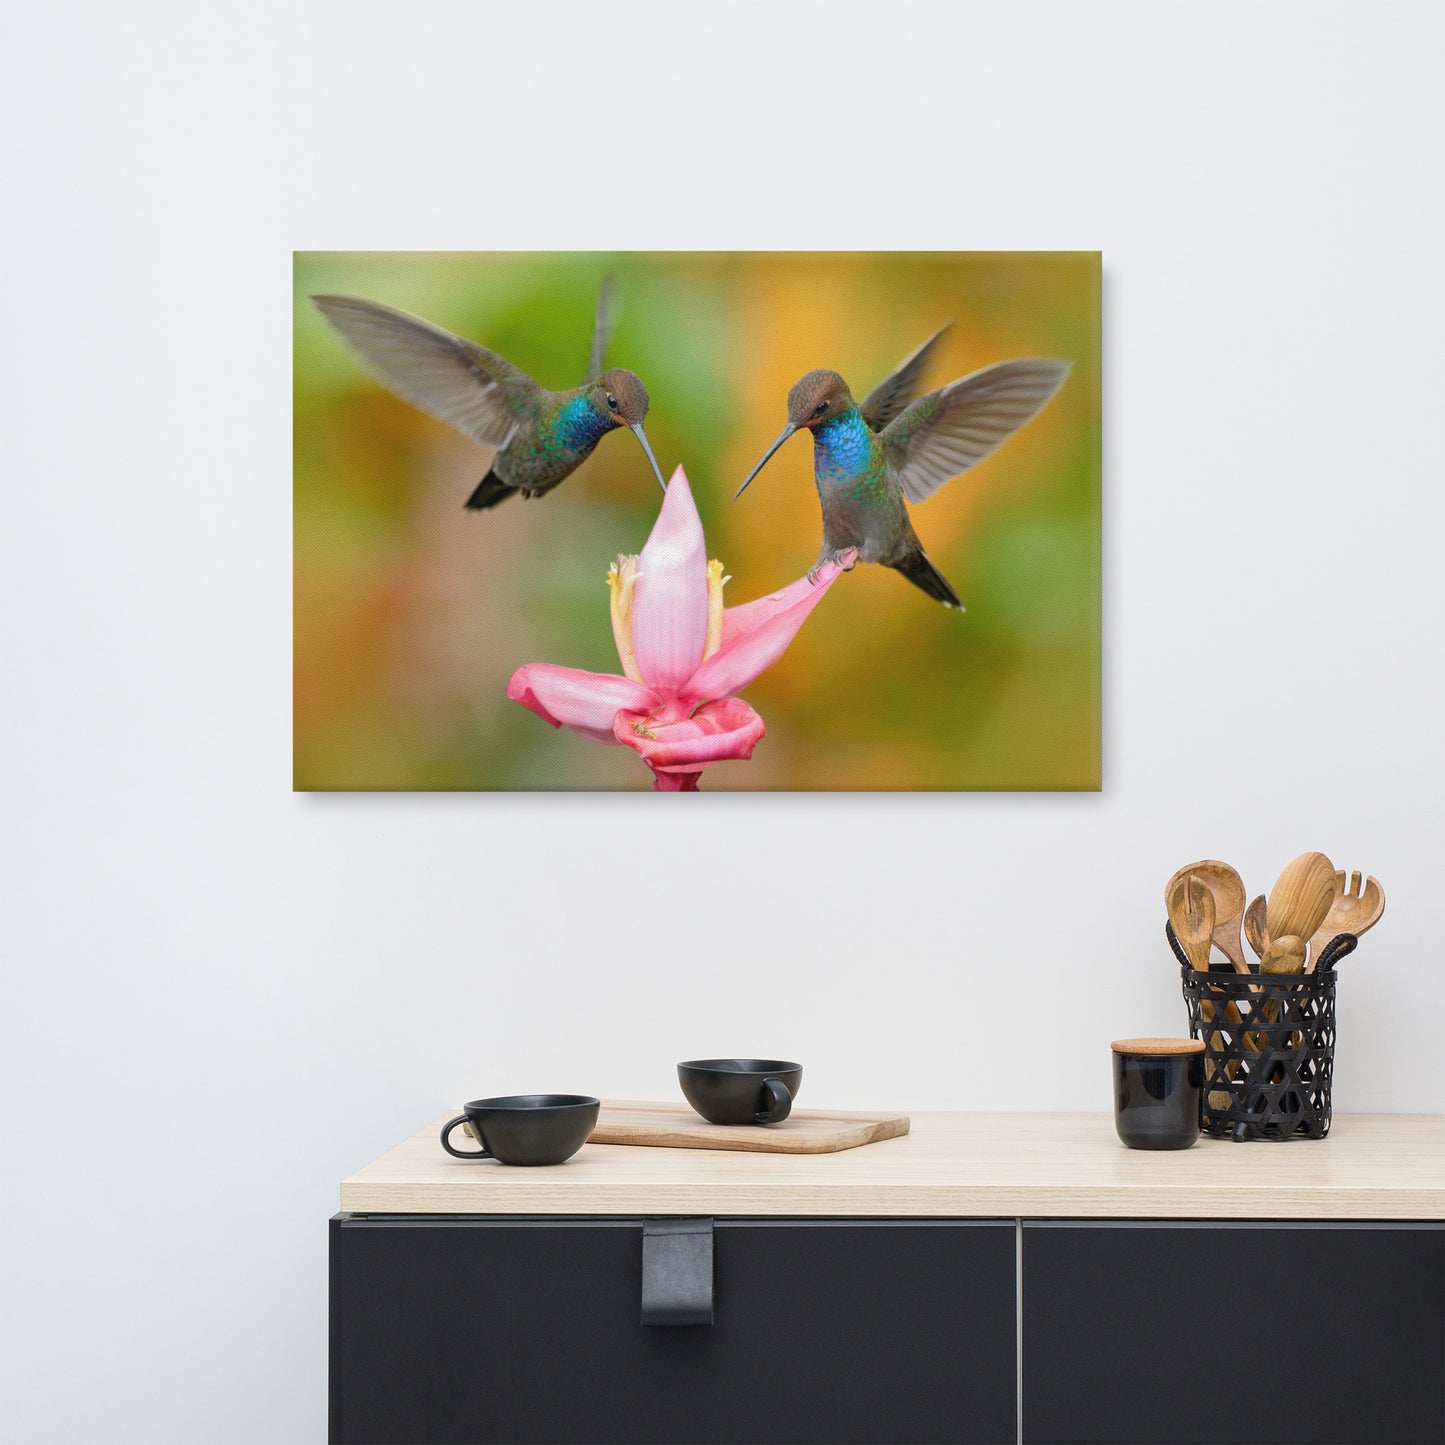 Hummingbirds with Pink Flower Bloom Animal Wildlife Photograph Canvas Wall Art Print